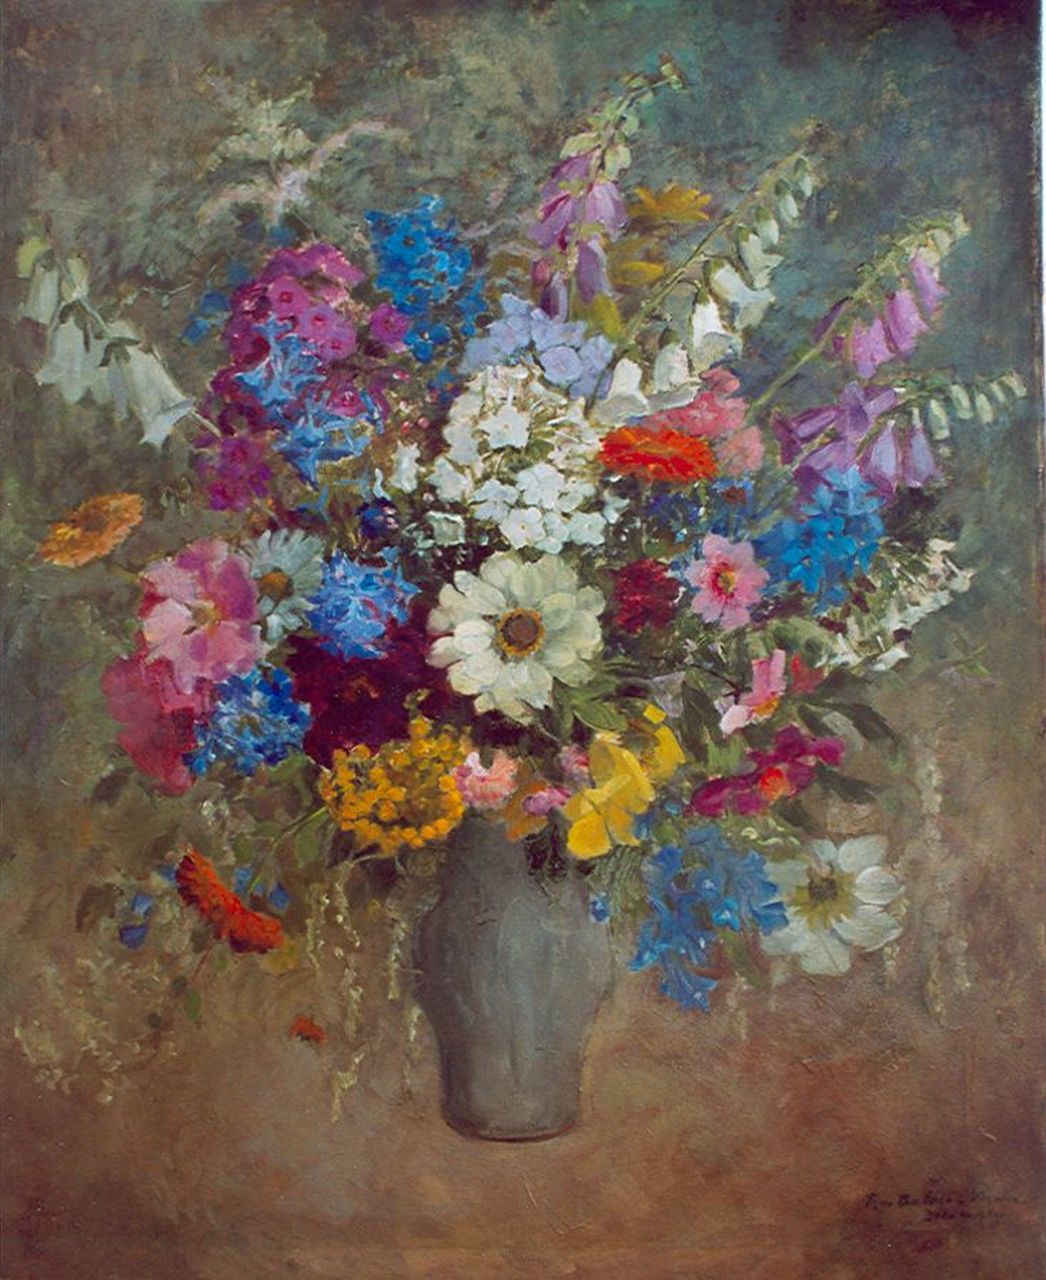 Balbian Verster-Bolderhey H.C. de | Hendrika Cornelia 'Rie' de Balbian Verster-Bolderhey, Field flowers in a vase, Öl auf Leinwand 99,5 x 79,5 cm, signed l.r.